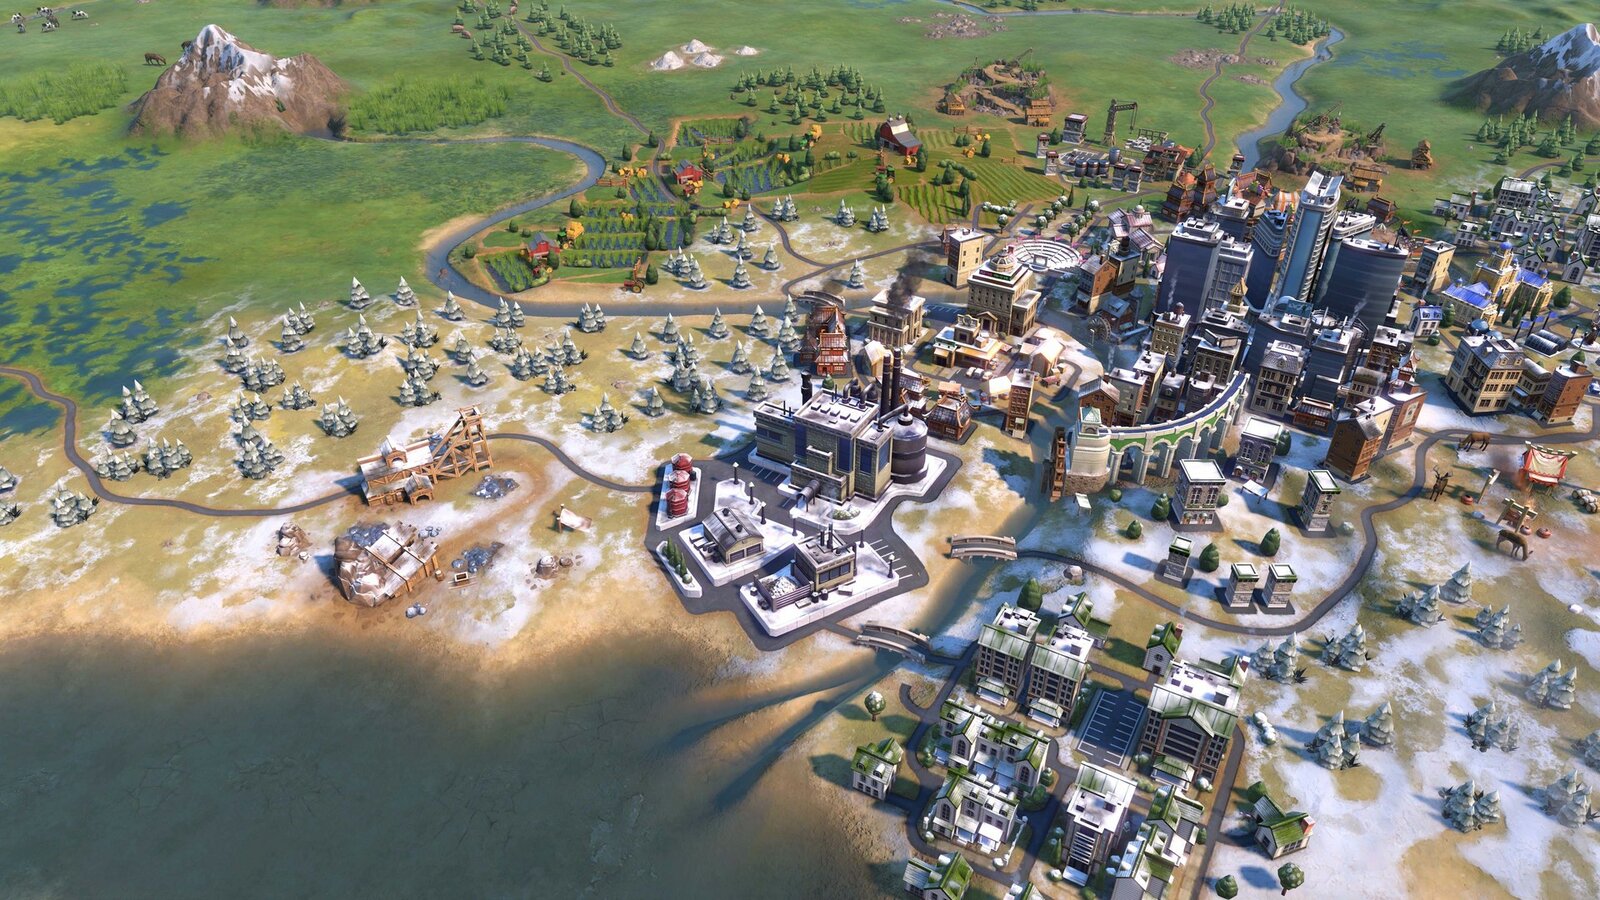 Sid Meier's Civilization VI – Vietnam & Kublai Khan Pack